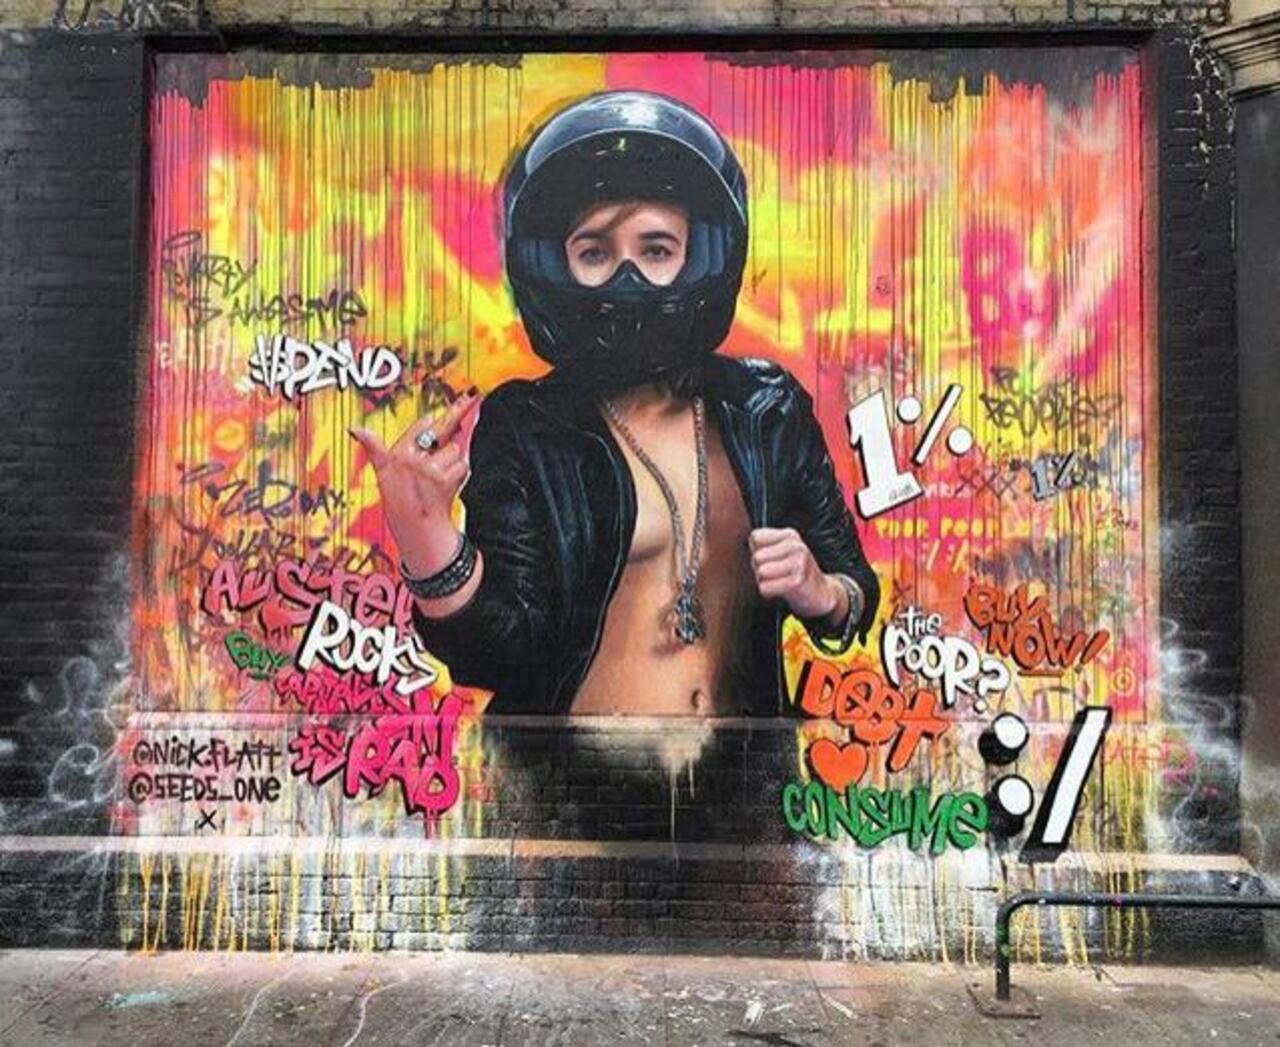 RT @sachindilshanfd: New Street Art collab by Nick Flatt &  Seeds One in London 

#art #graffiti #mural #streetart http://t.co/7pHf3eI8r0